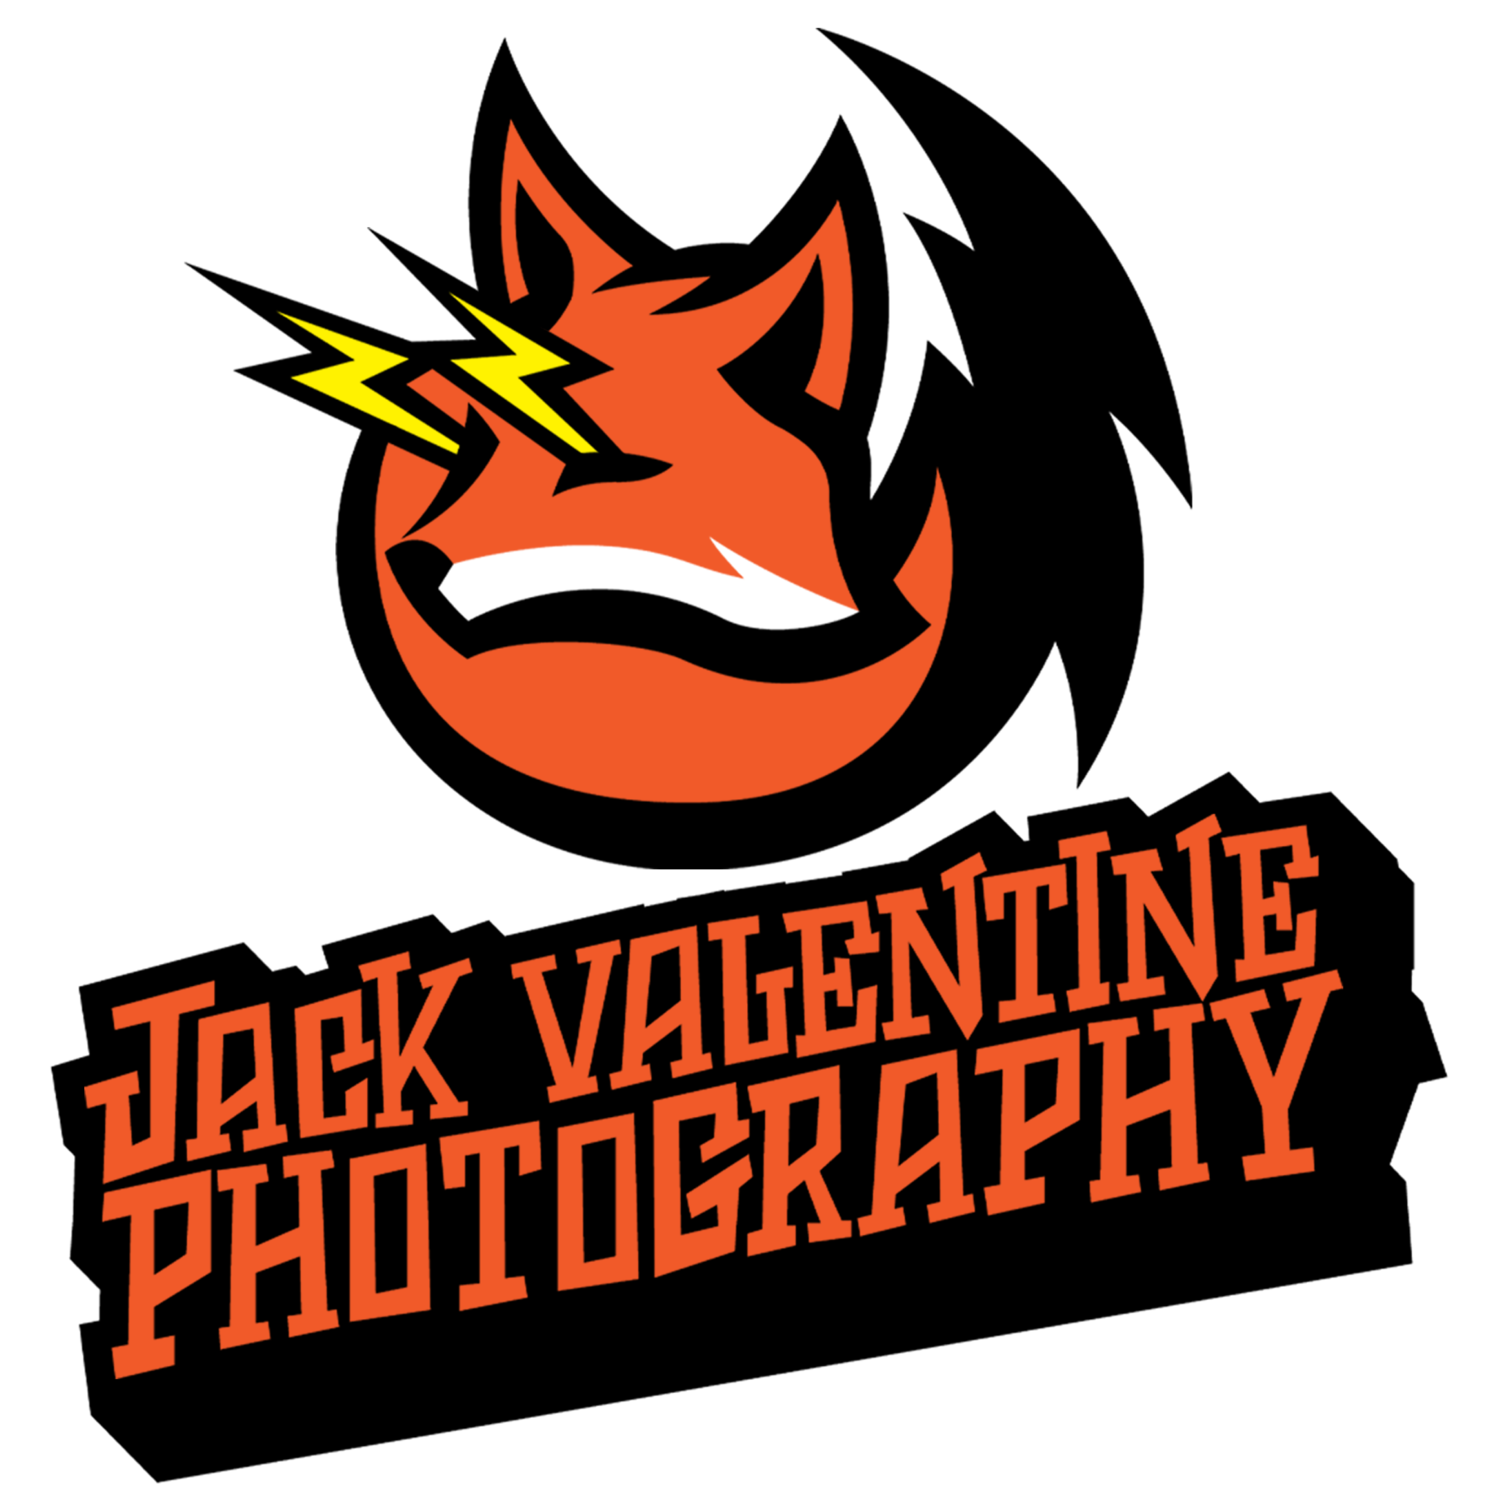 Jack Valentine Photography